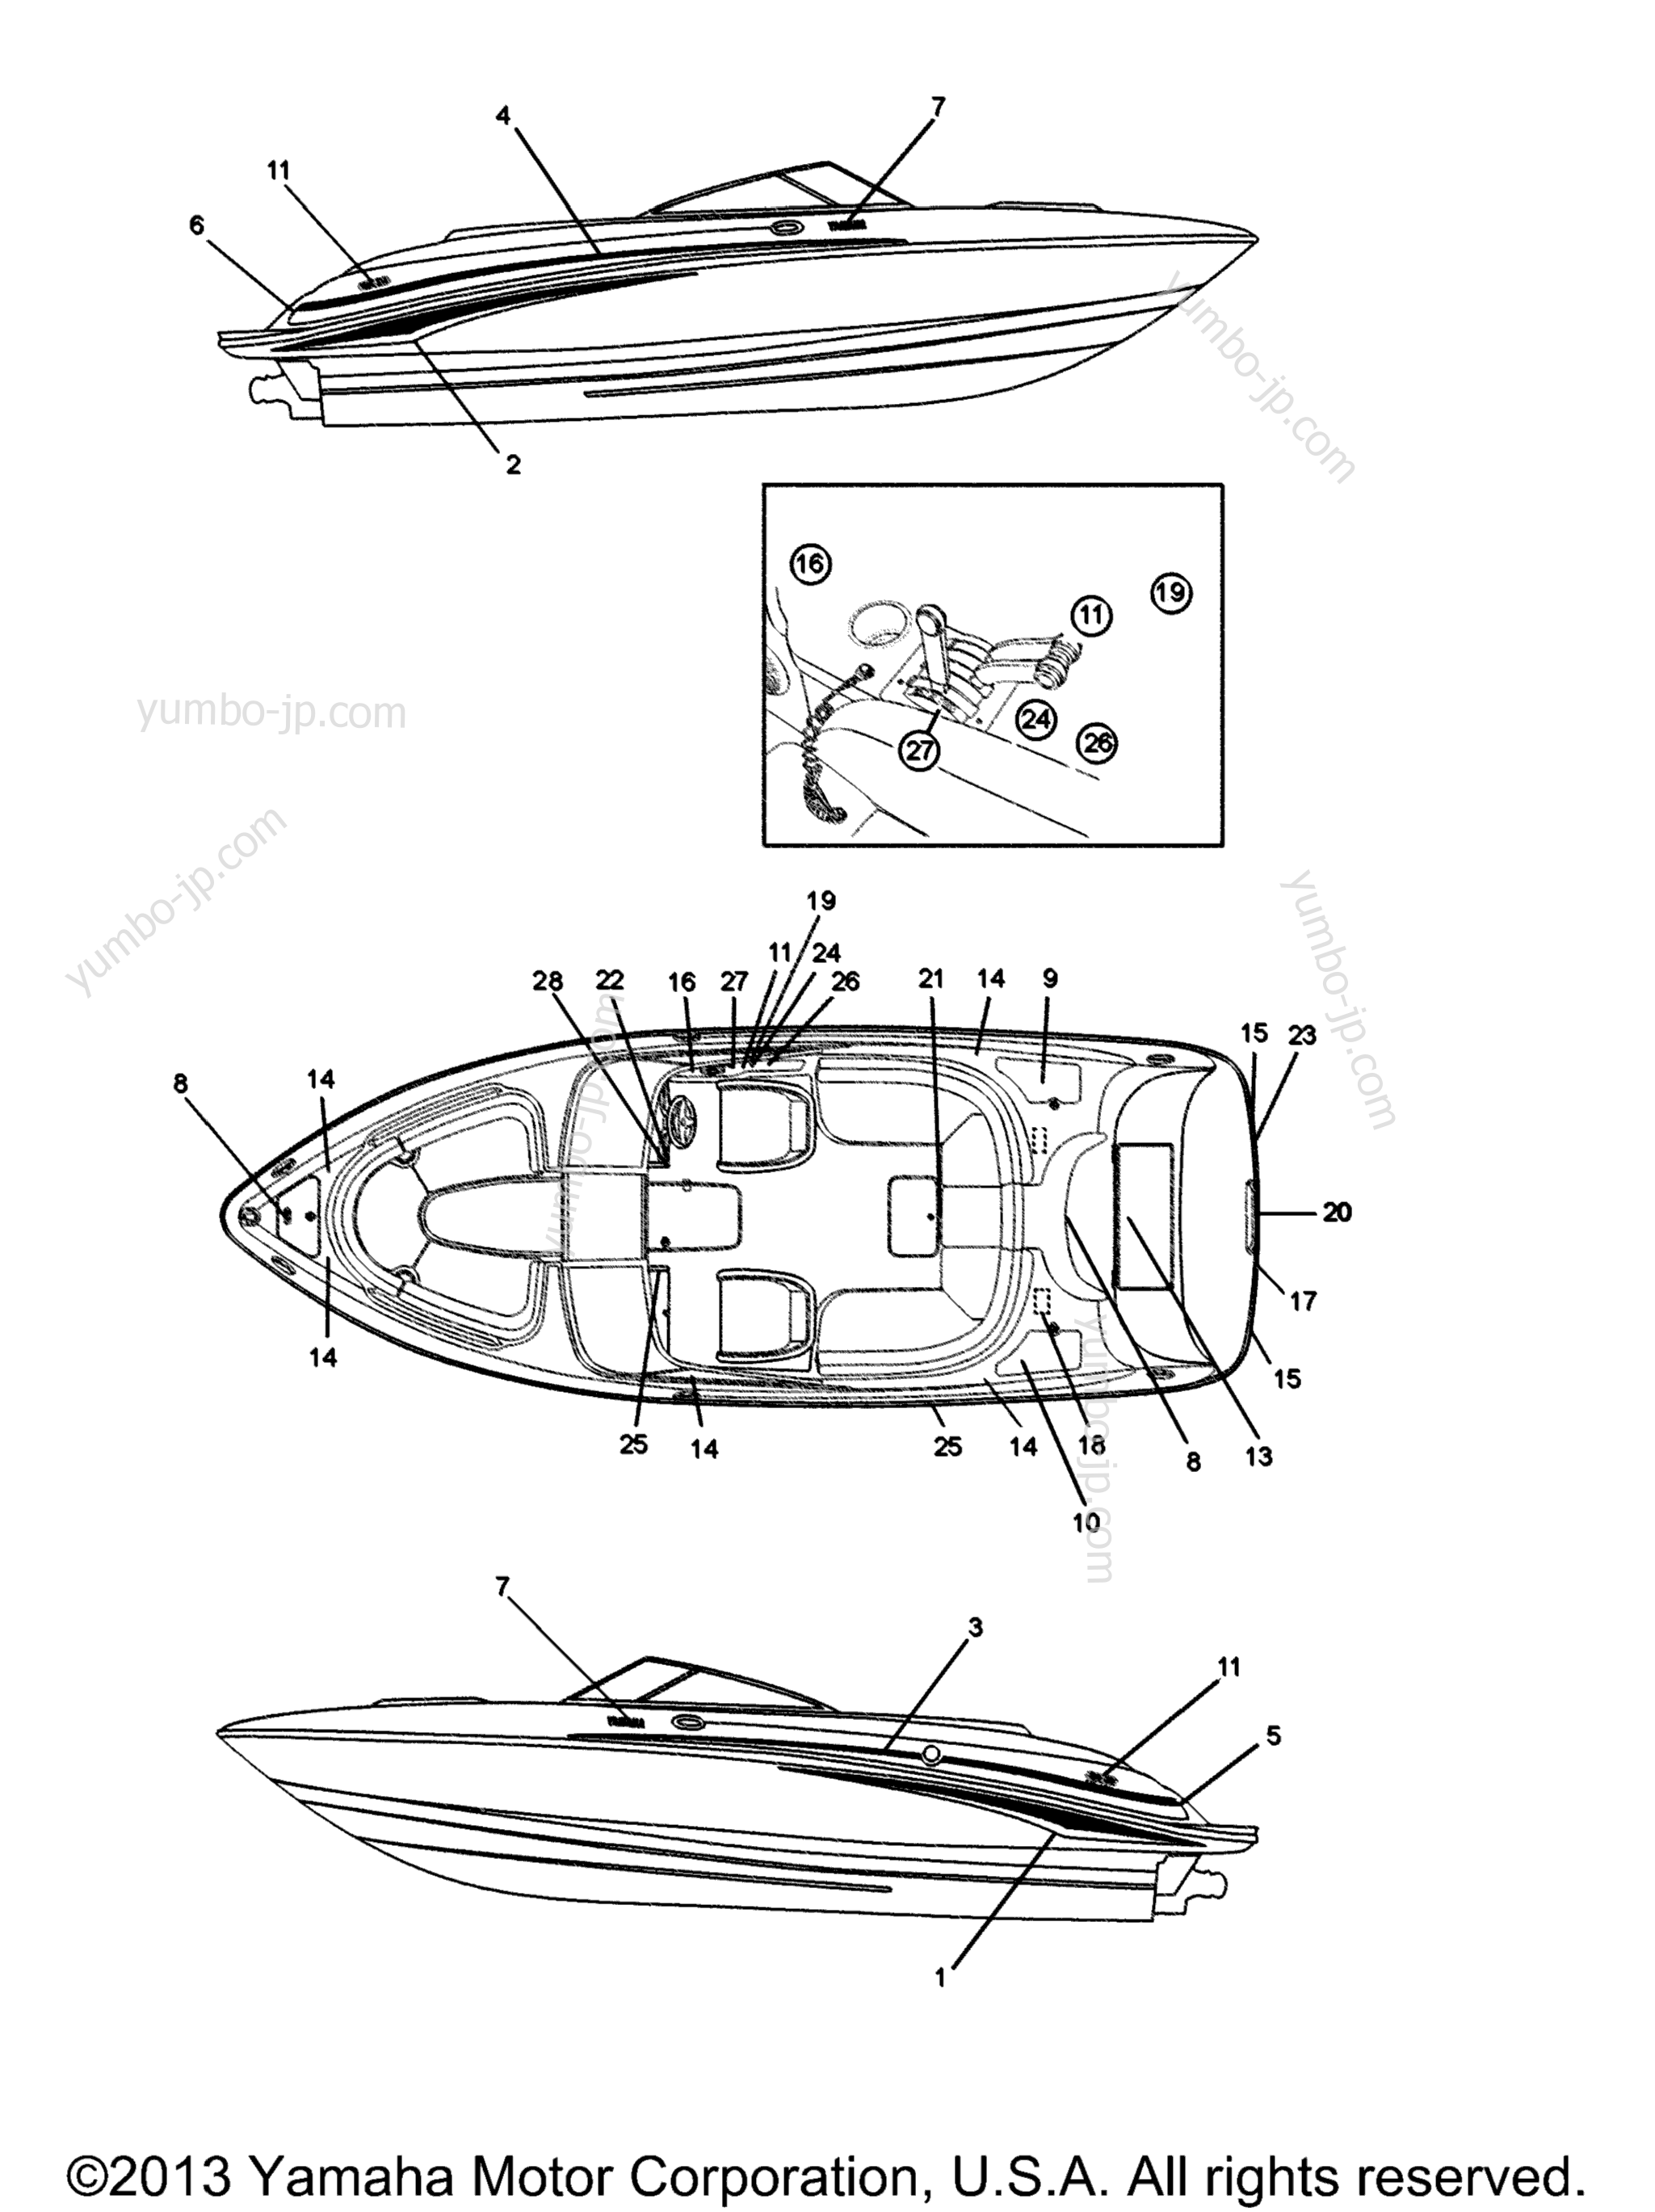 Graphics for boats YAMAHA SR230 (Cali.) (SRT1000CC) CA 2004 year